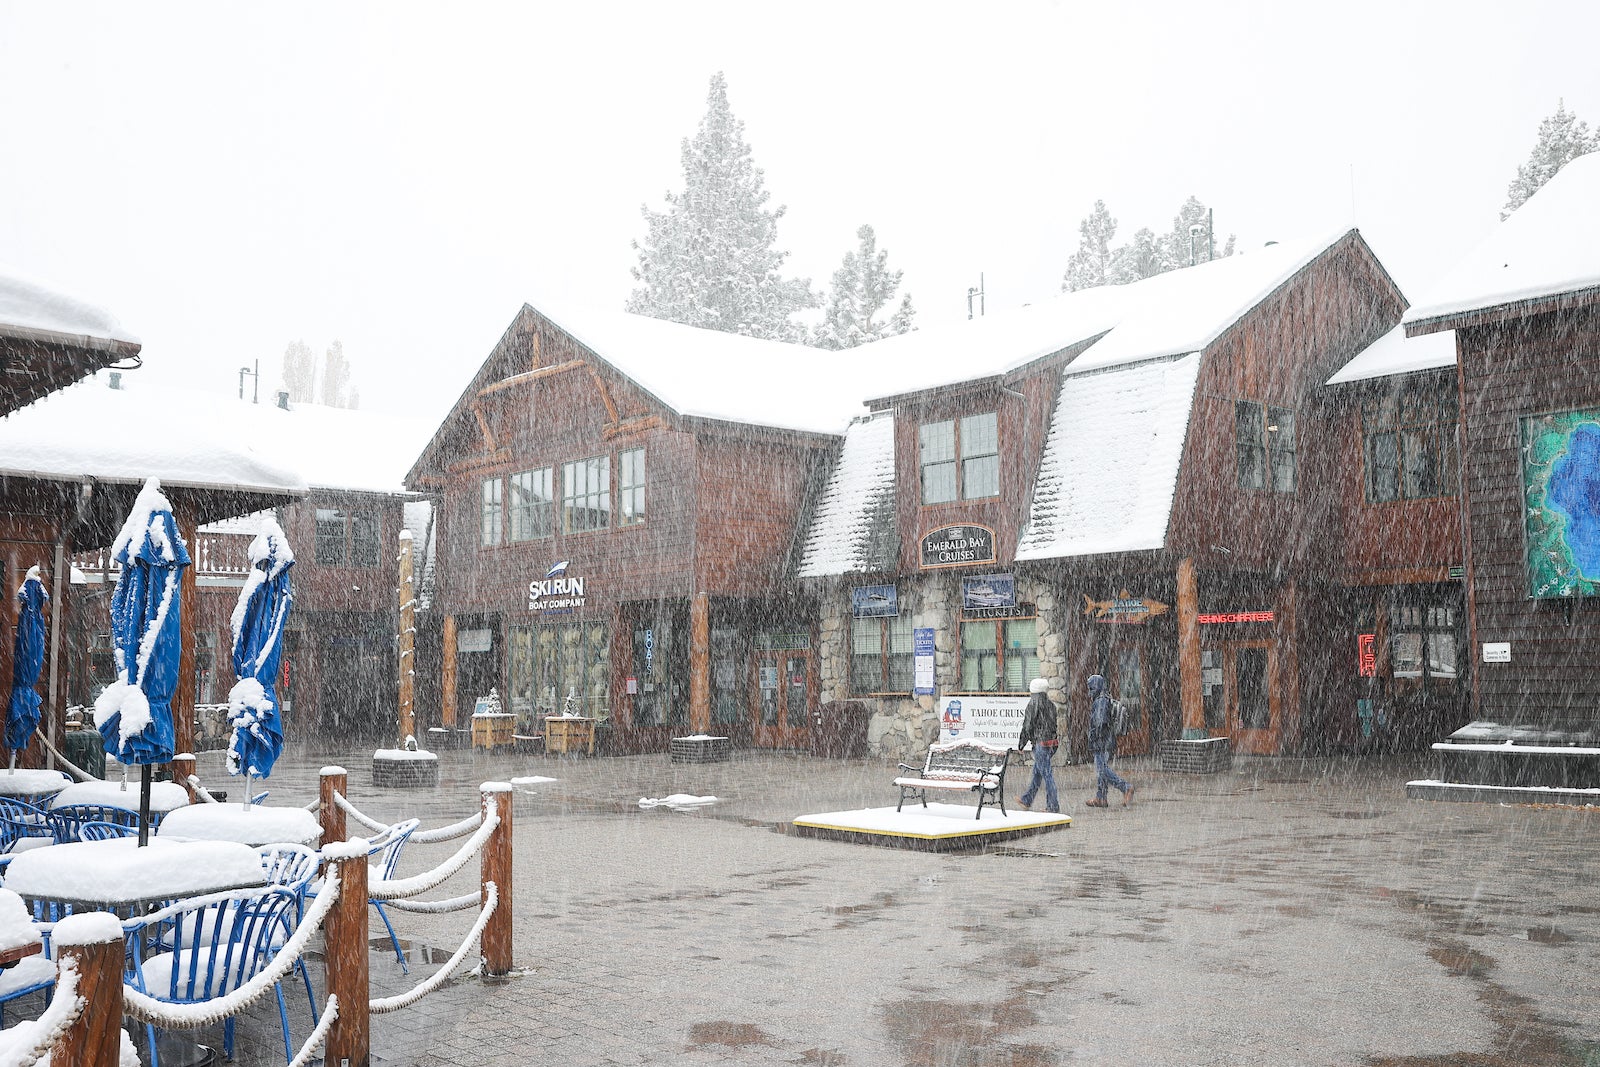 Ski resorts open early thanks to November snowfall